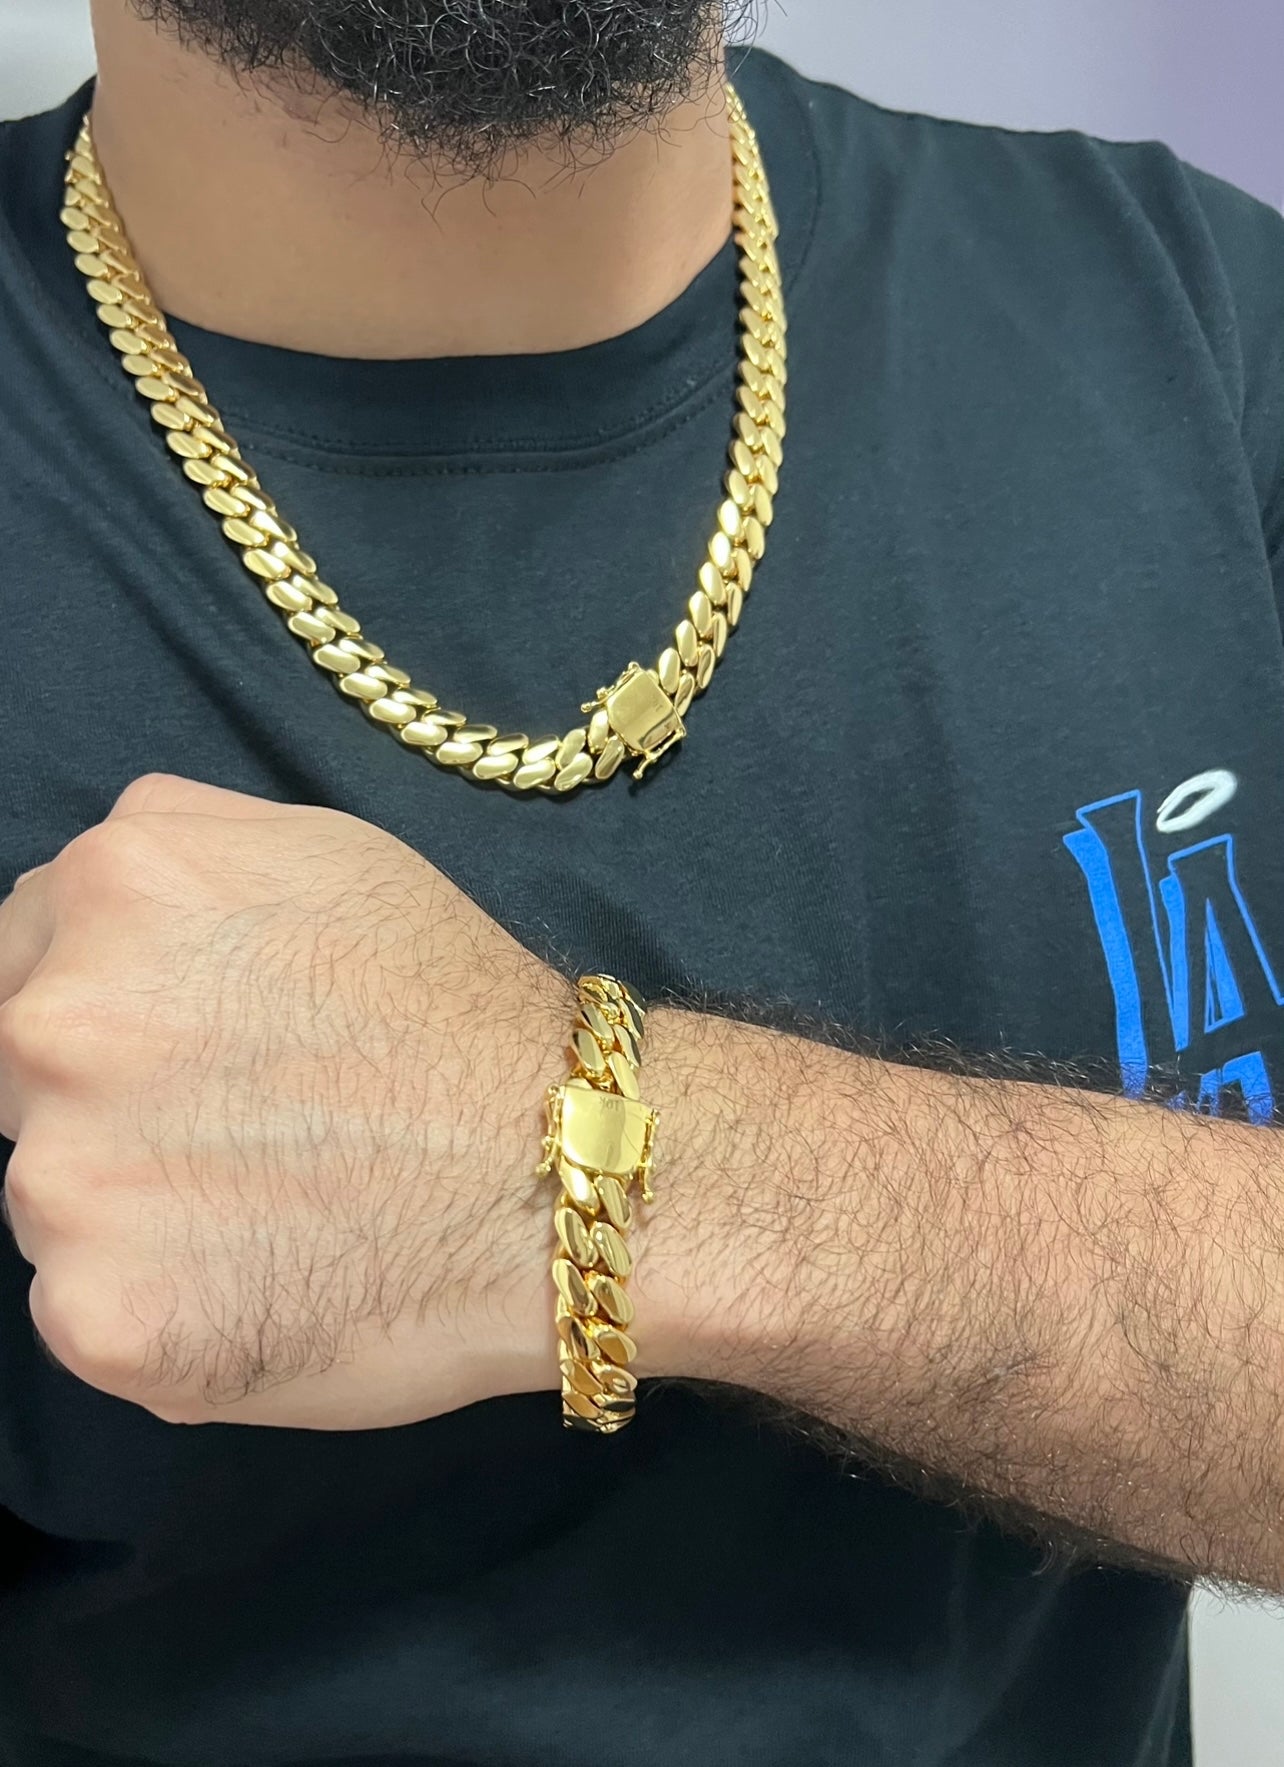 chain and bracelet set gold bonded hogh quality